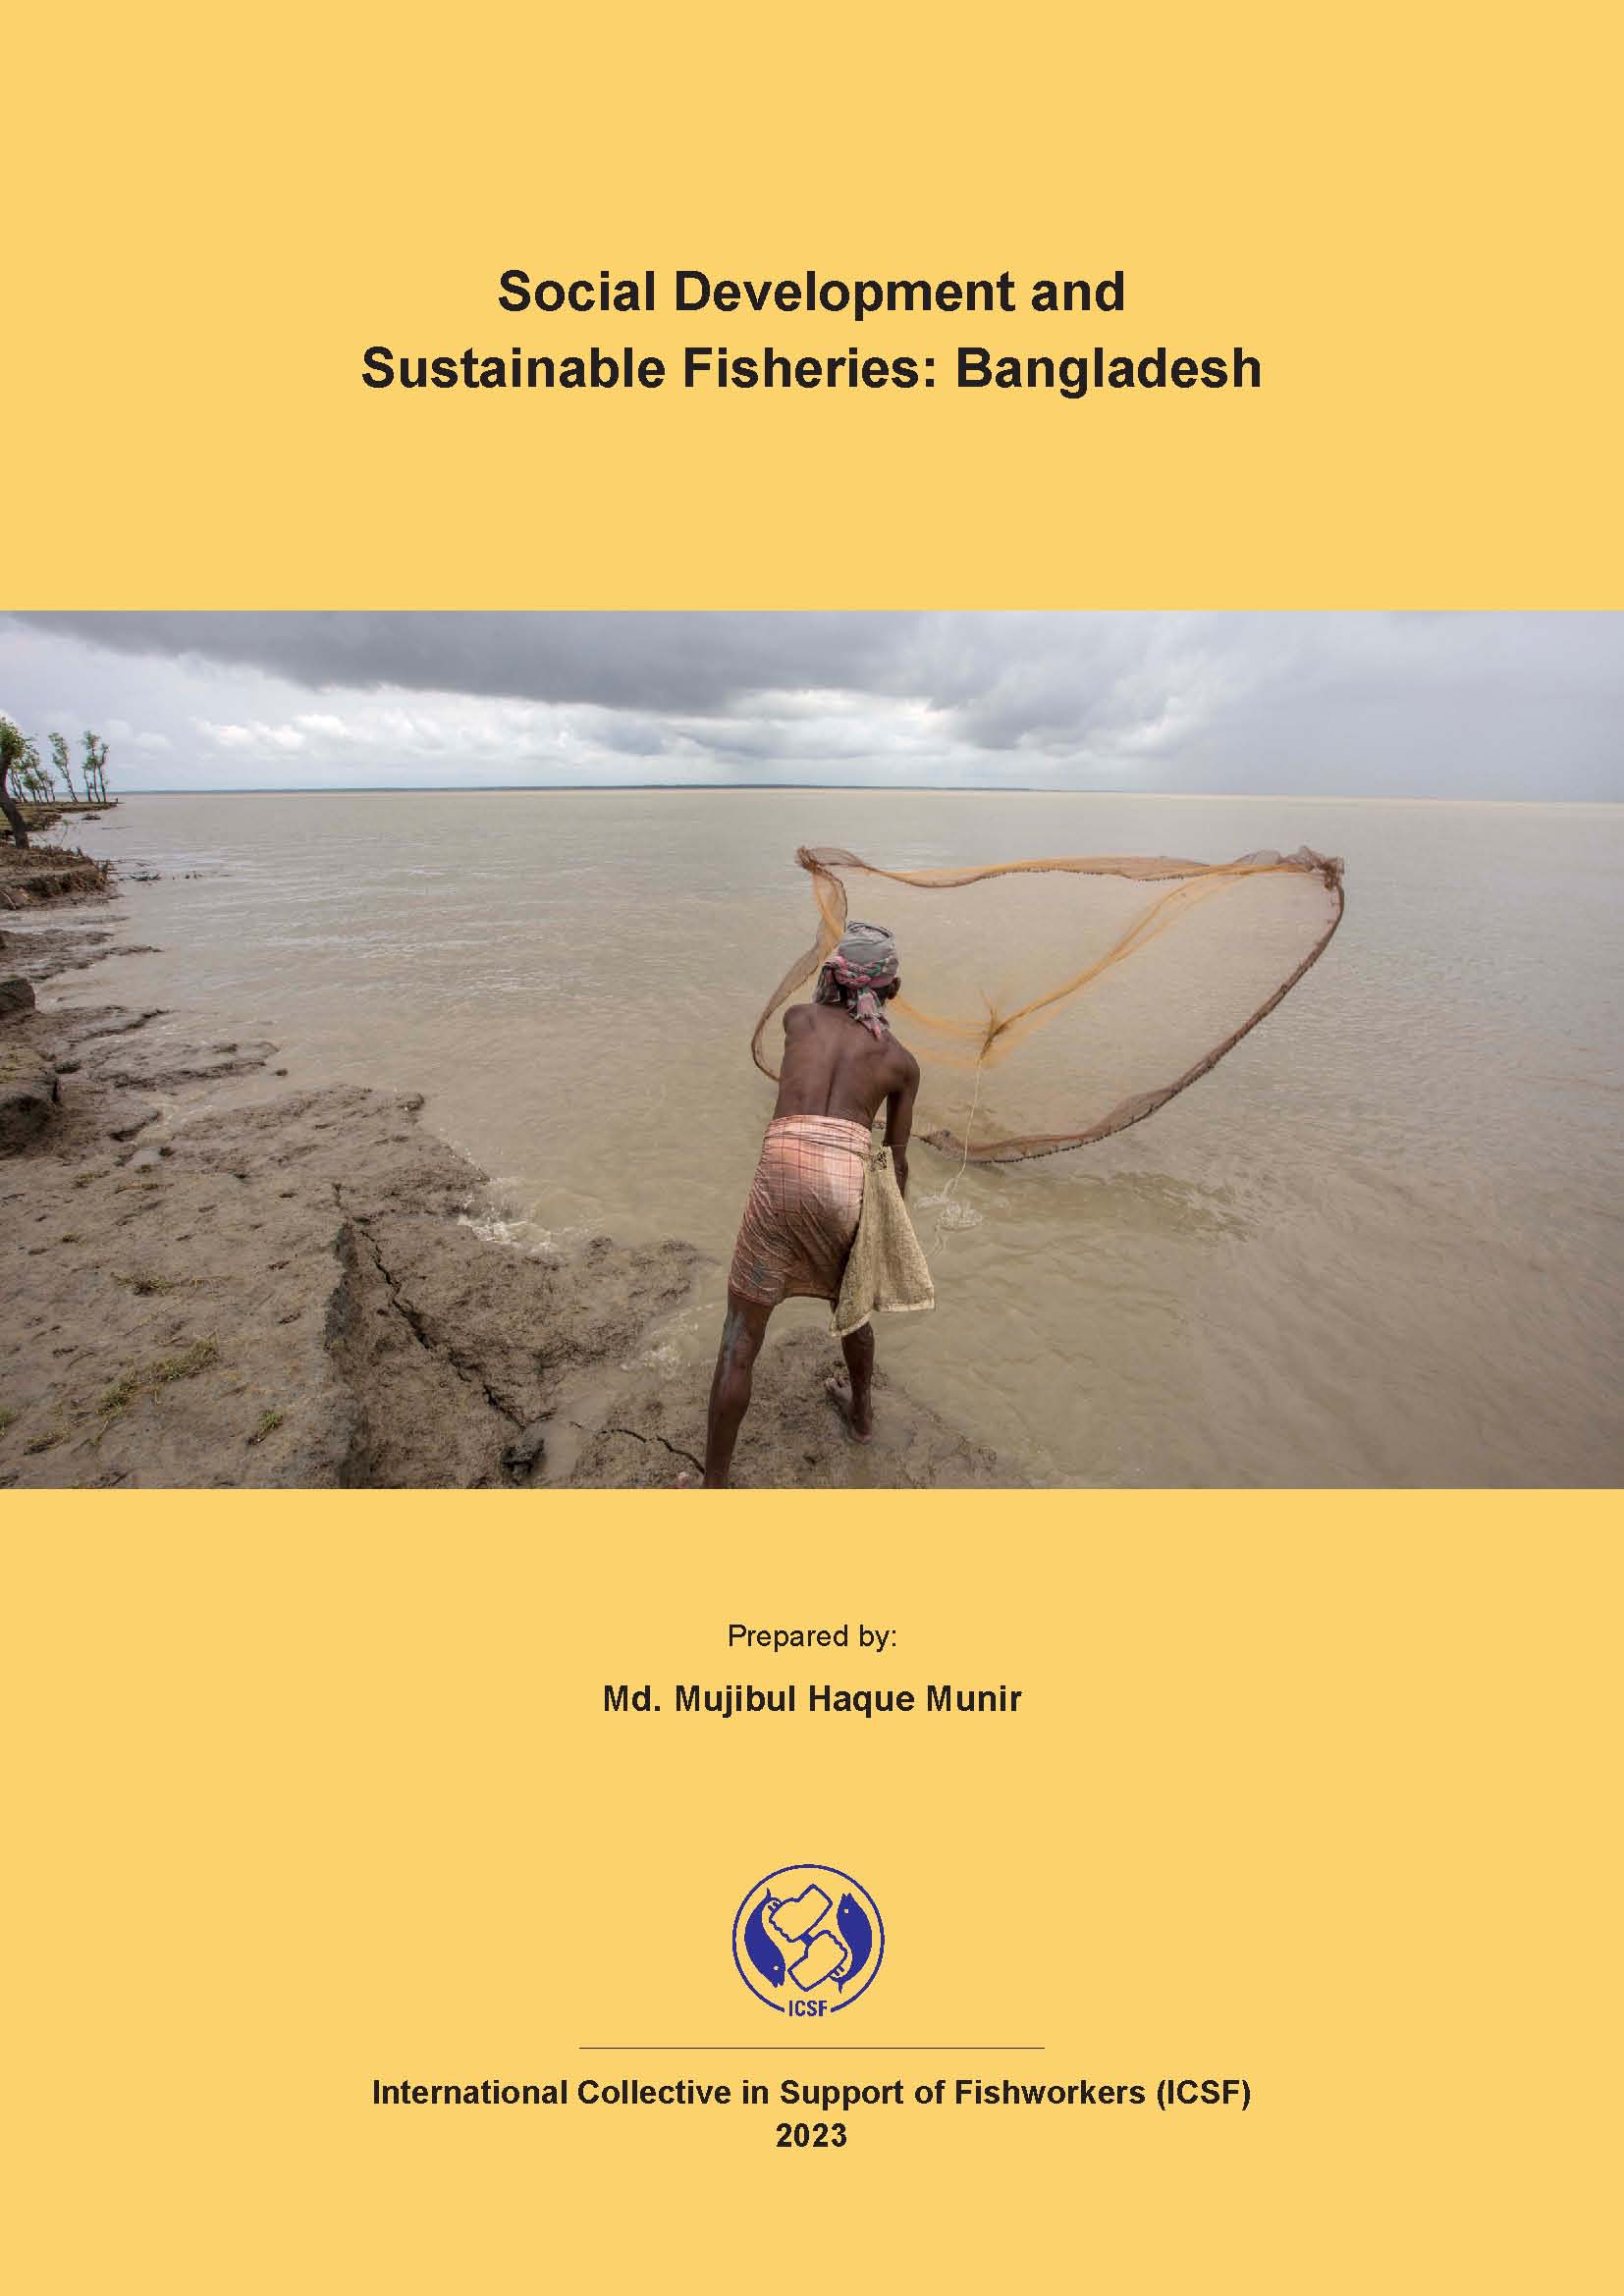 Social Development and Sustainable Fisheries: Bangladesh by Md. Mujibul Haque Munir